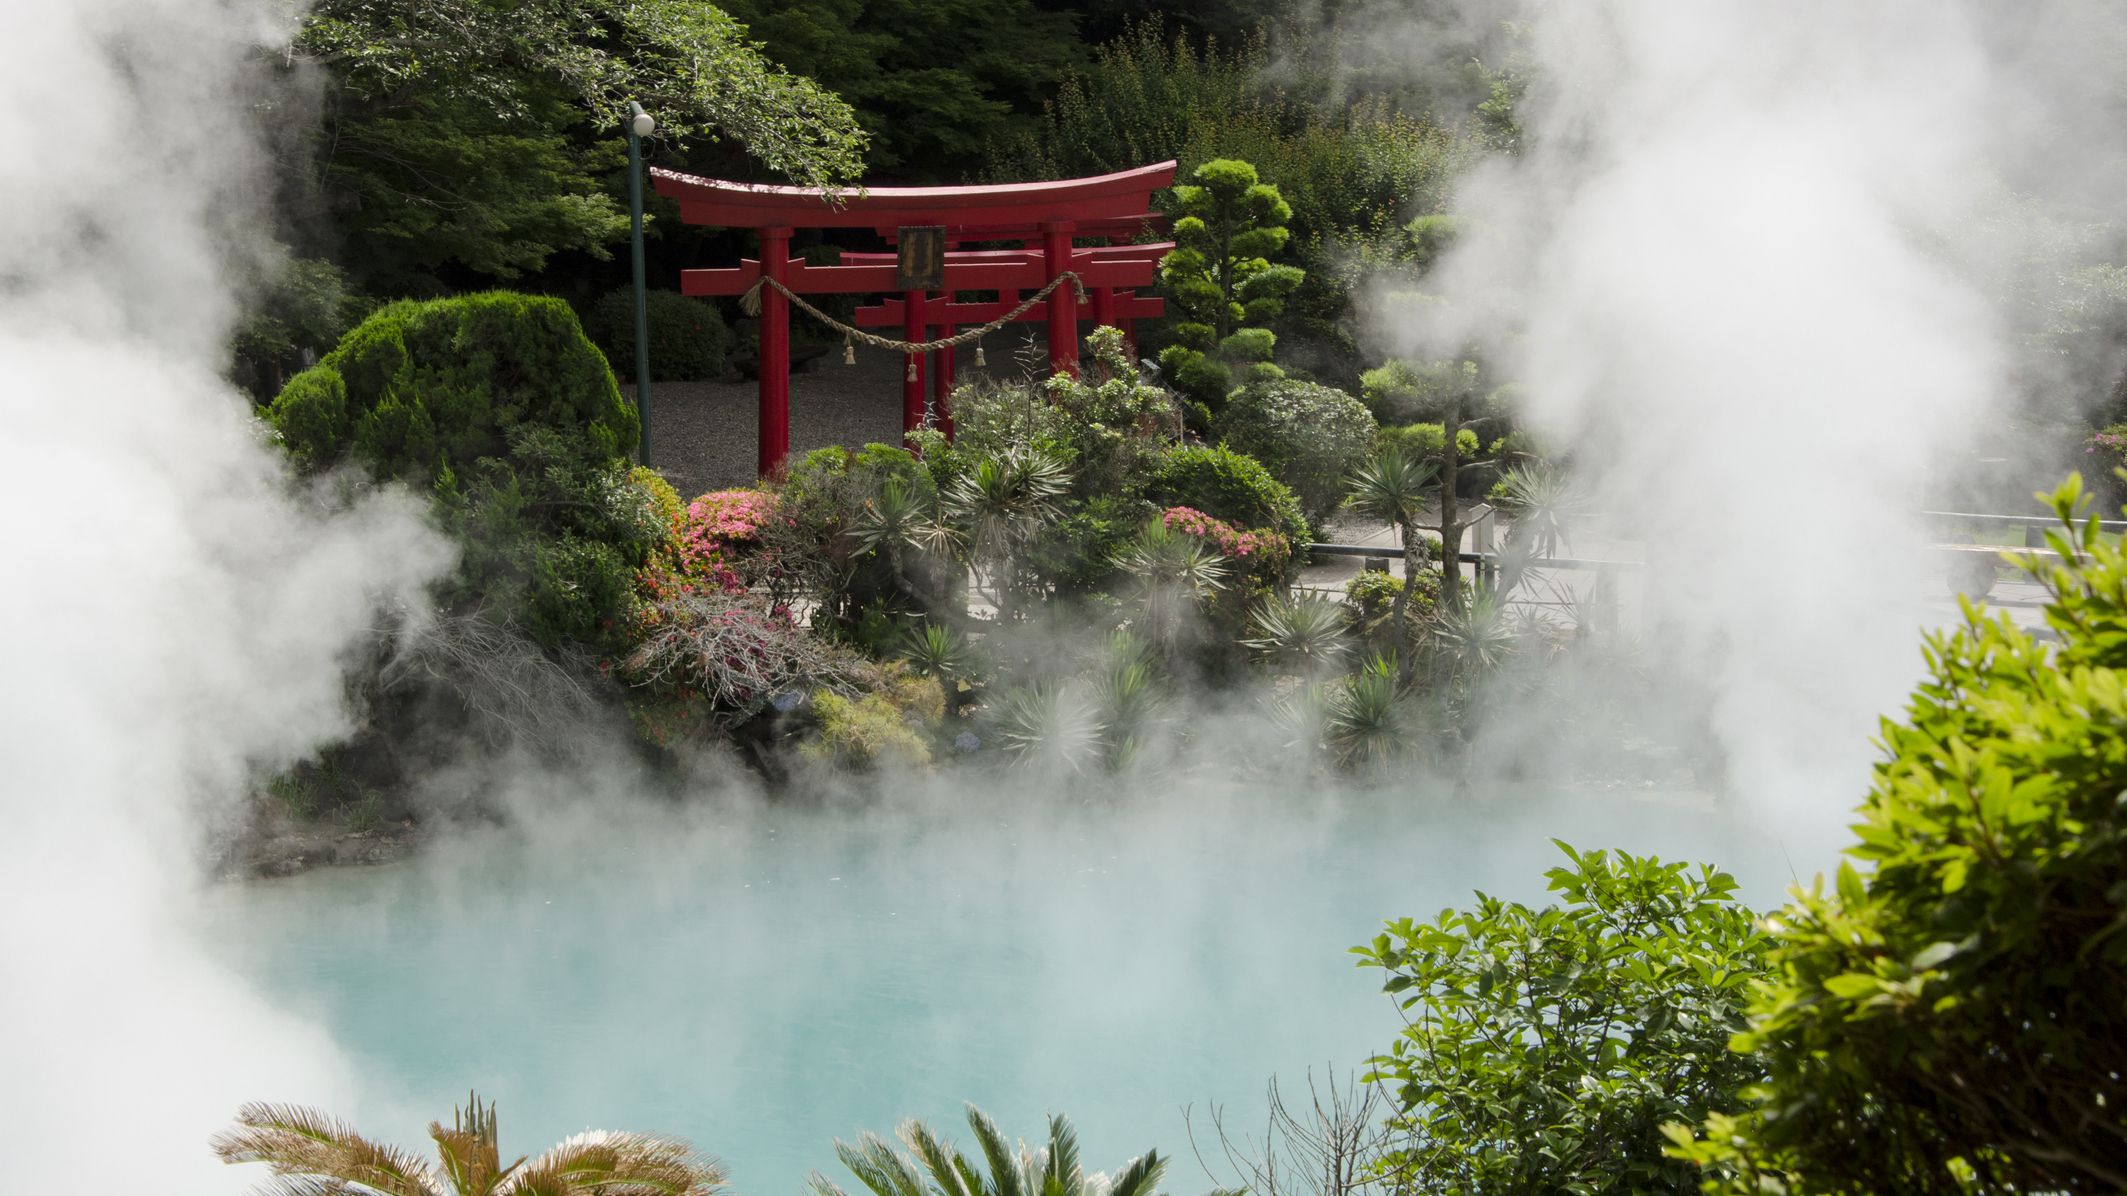 hot springs around the globe, steam rising